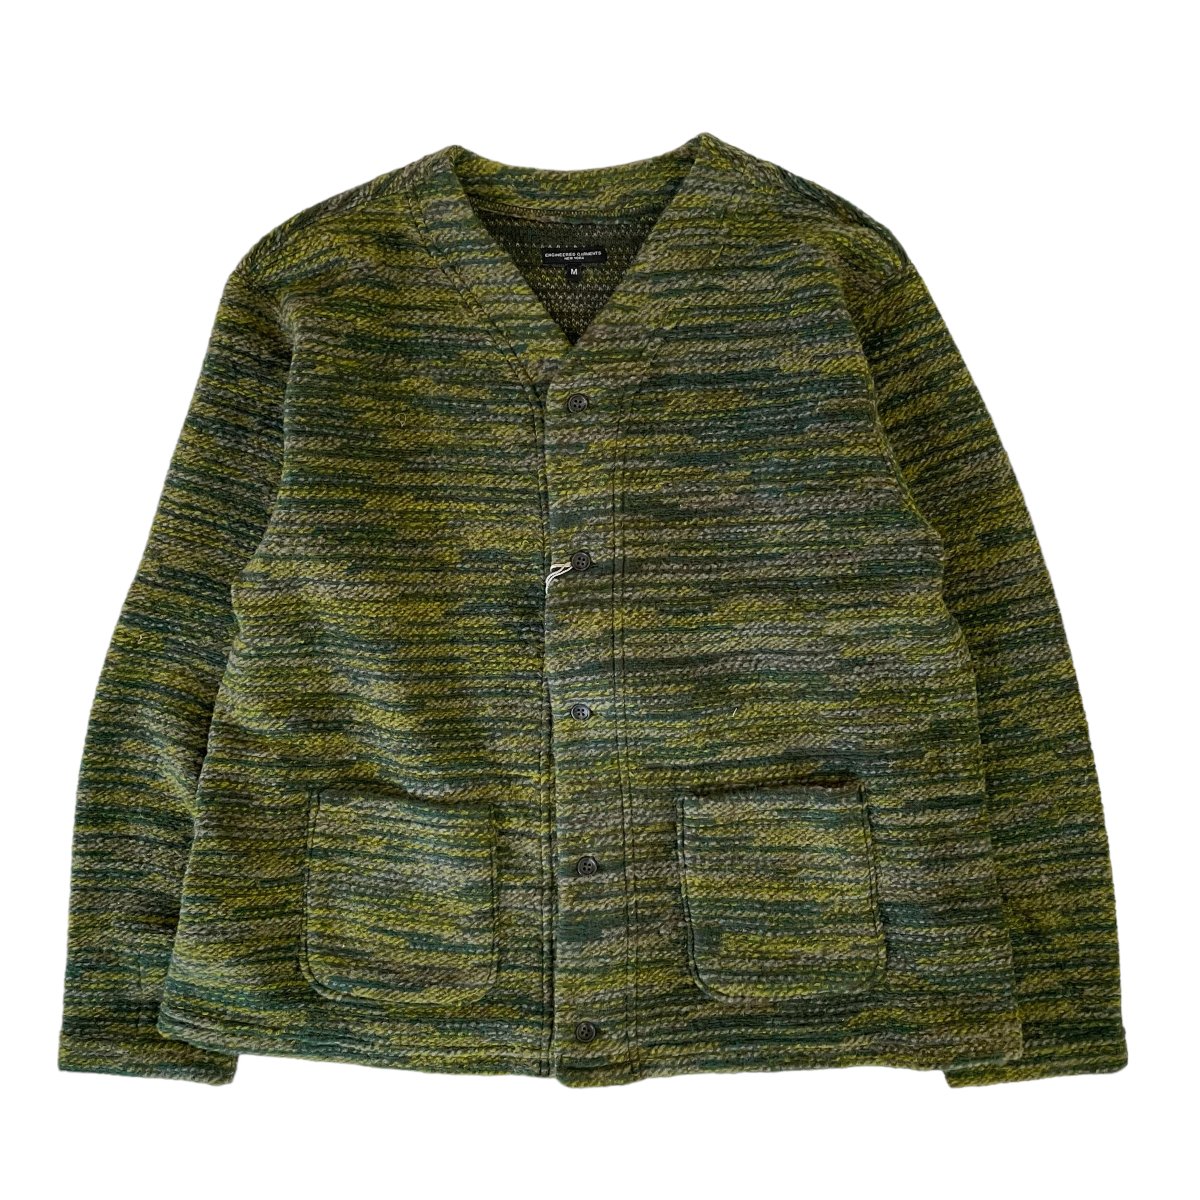 Engineered Garments <BR>Knit Cardigan - Poly Wool Melange Knit - (GREEN)

